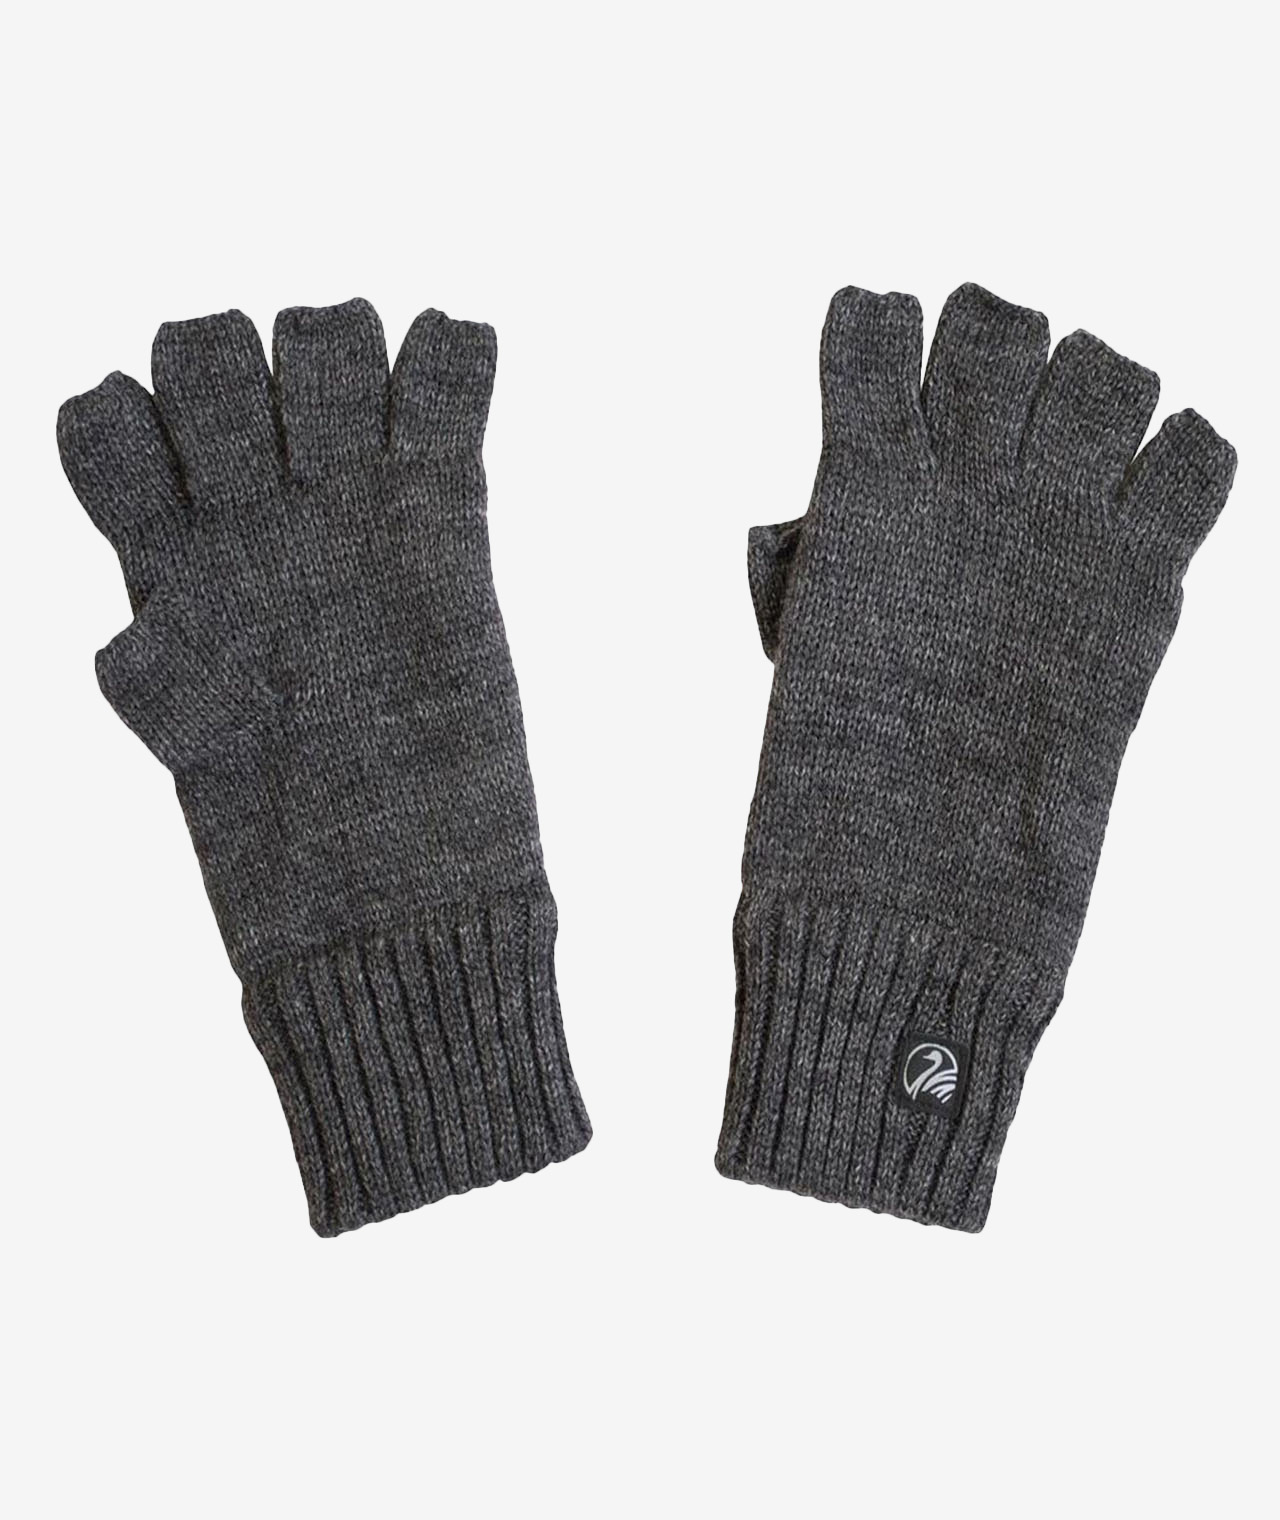 Wool Fingerless Glove with Fleece Lining